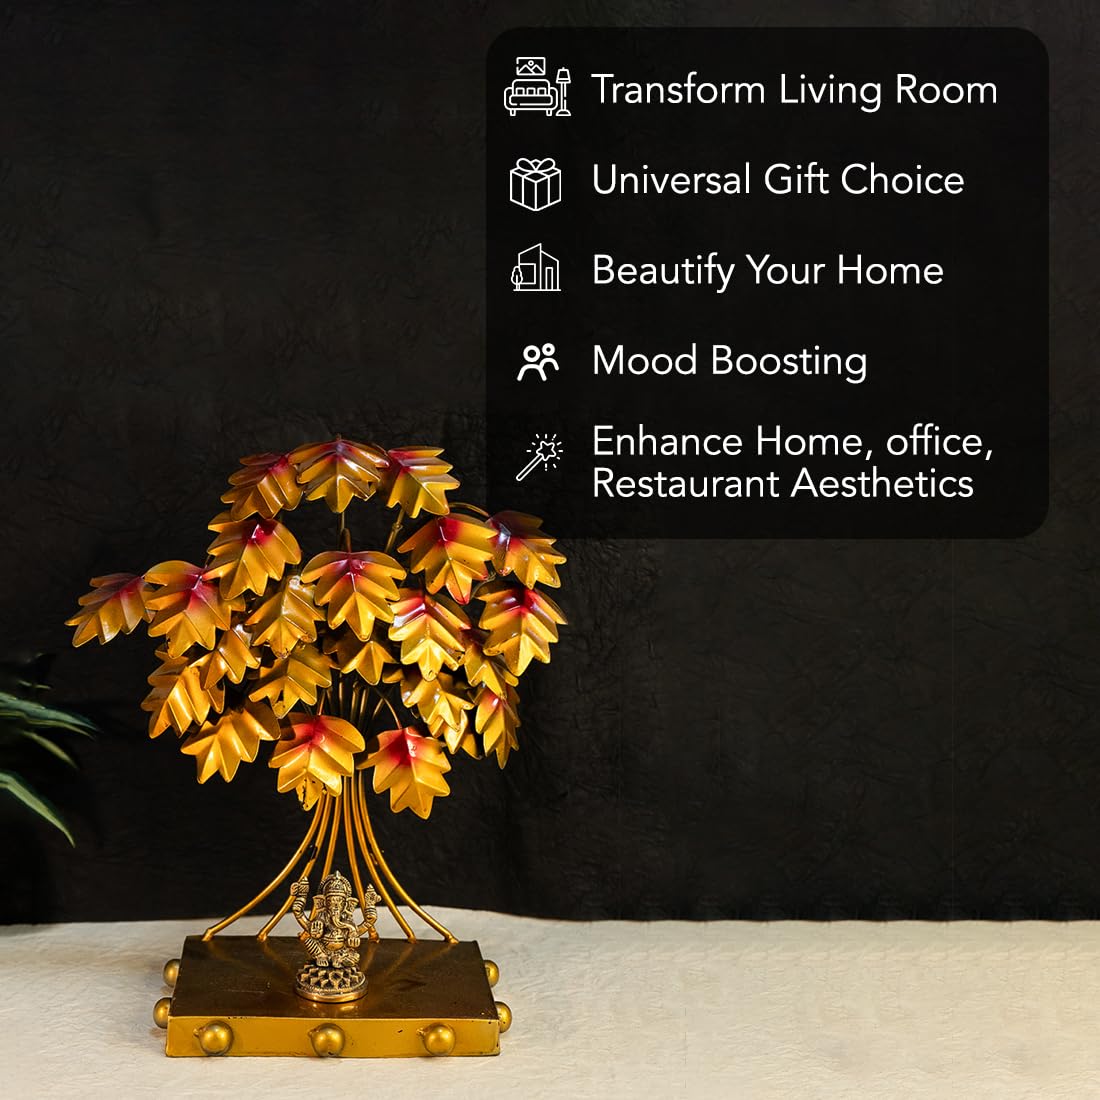 Ekhasa Metal Tree Display Stand for Idols & Decor | Perfect Decorative Item for Living Room, Home Decor, Pooja Mandir, Retail Displays, Hotel Lobbies, Receptions, Yoga, Wellness Studios